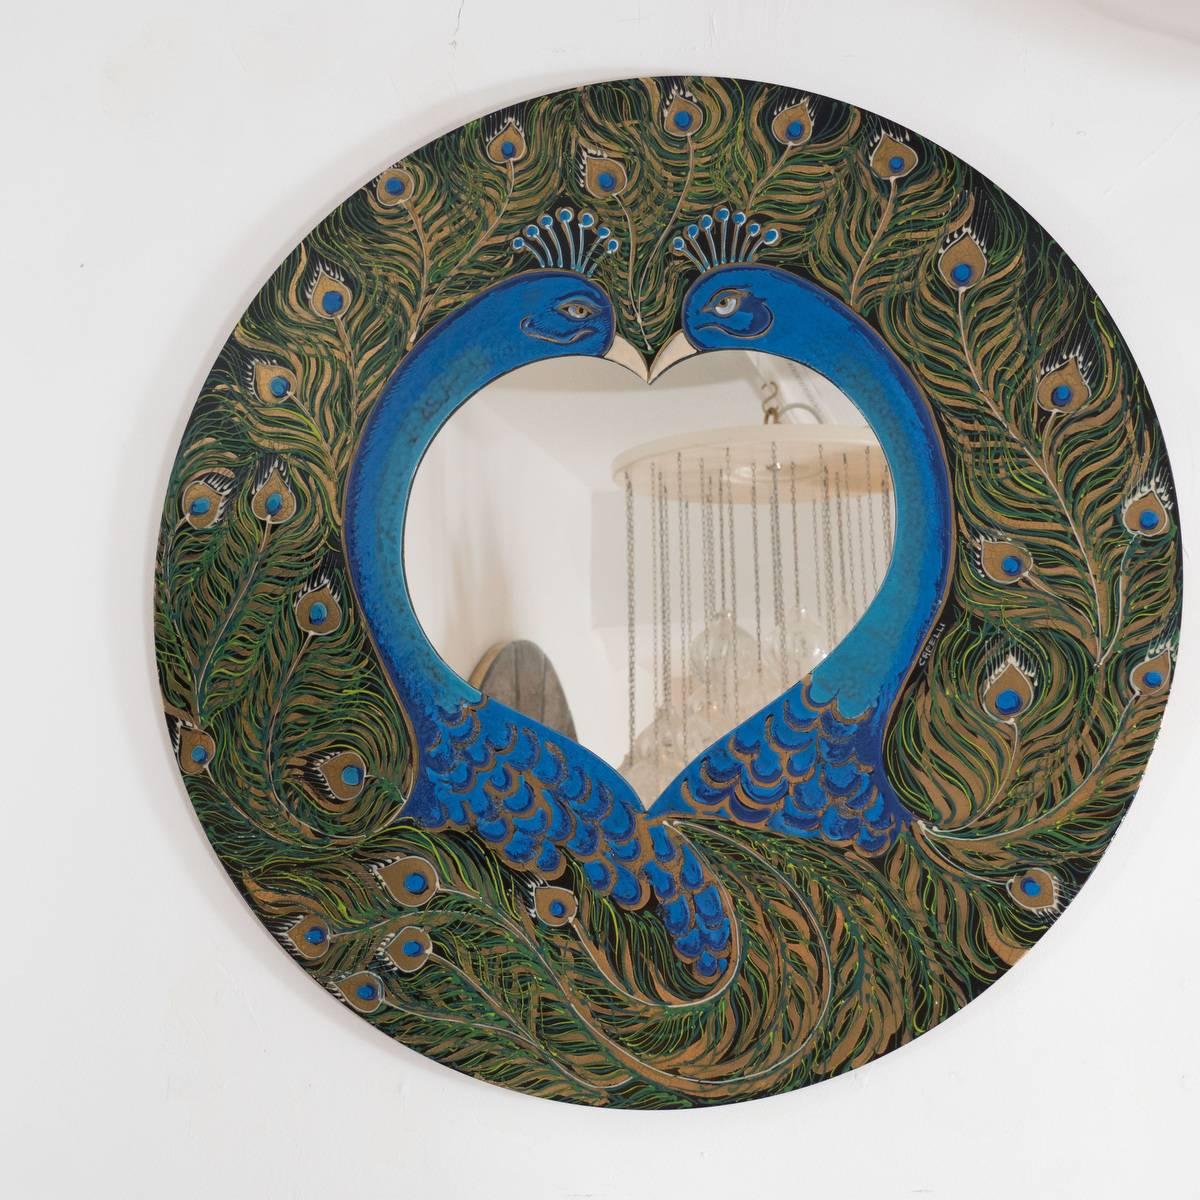 Painted peacock motif mirror.